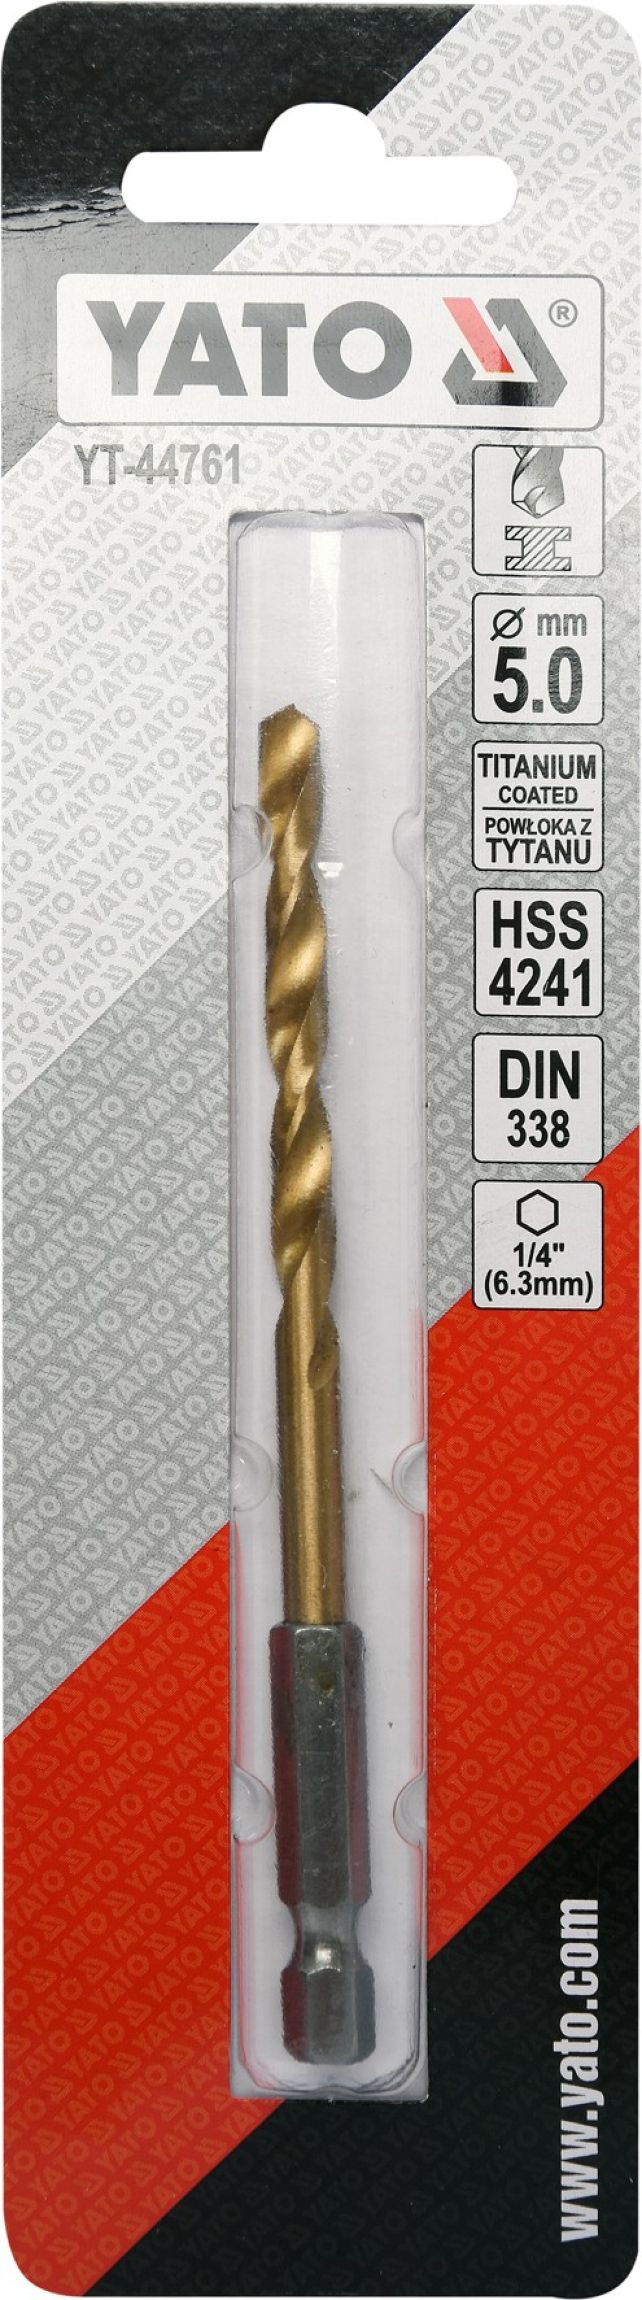 Vrtk do kovu HSS-titan 7,5mm se estihranou stopkou 1/4" Yato YT-44767